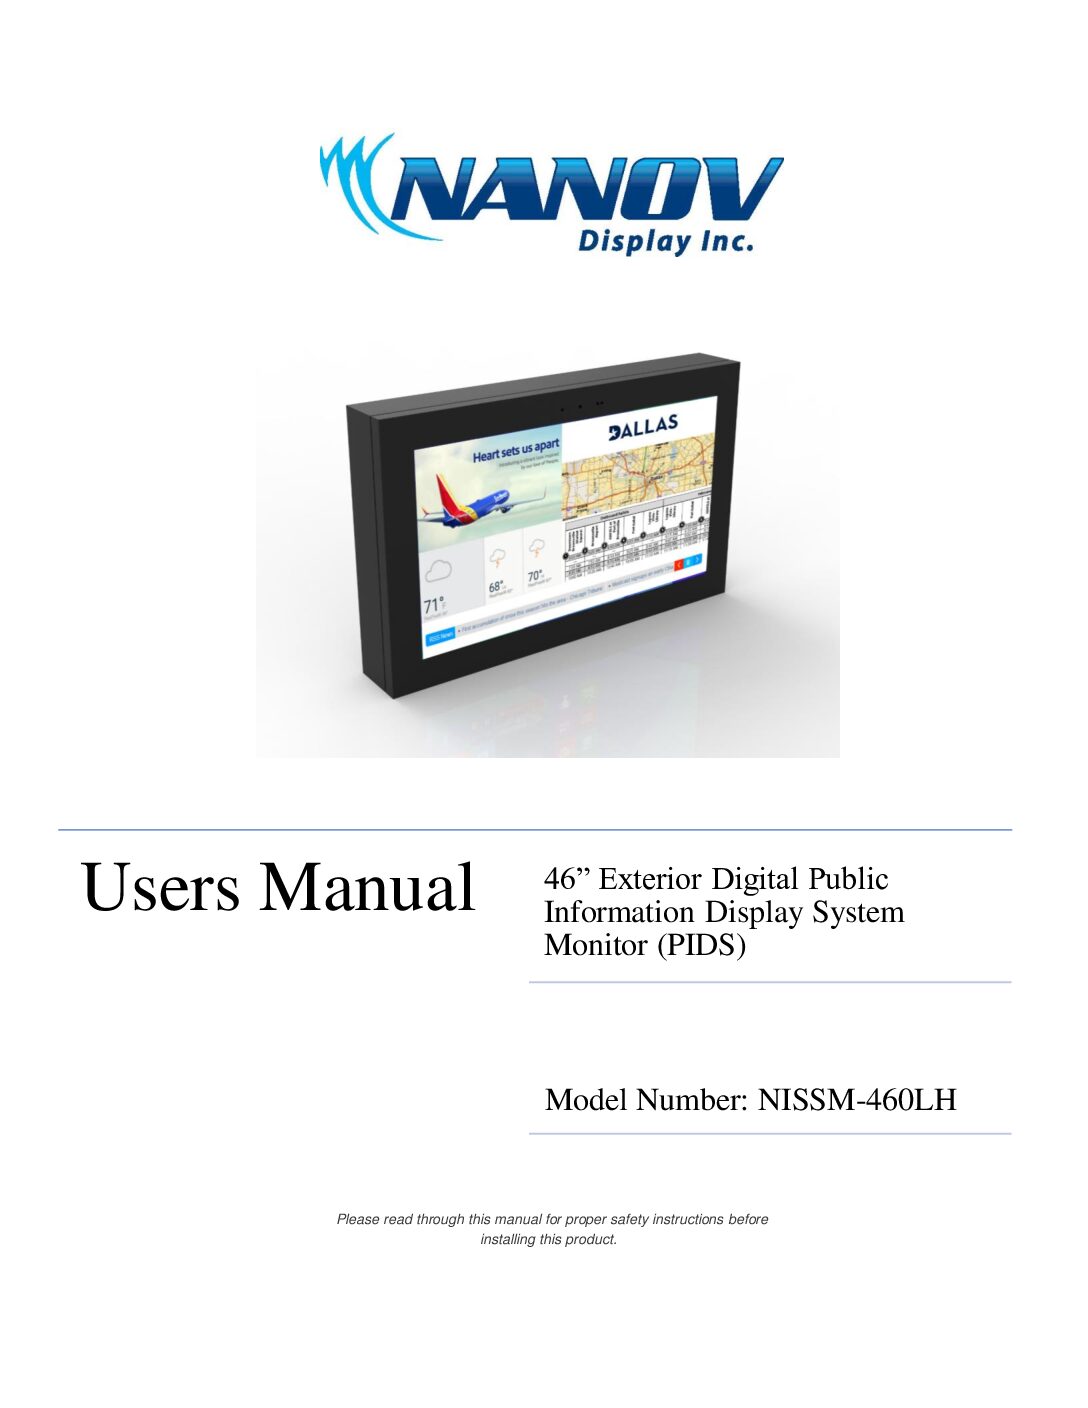 Exterior Digital Public Information Display System Monitor